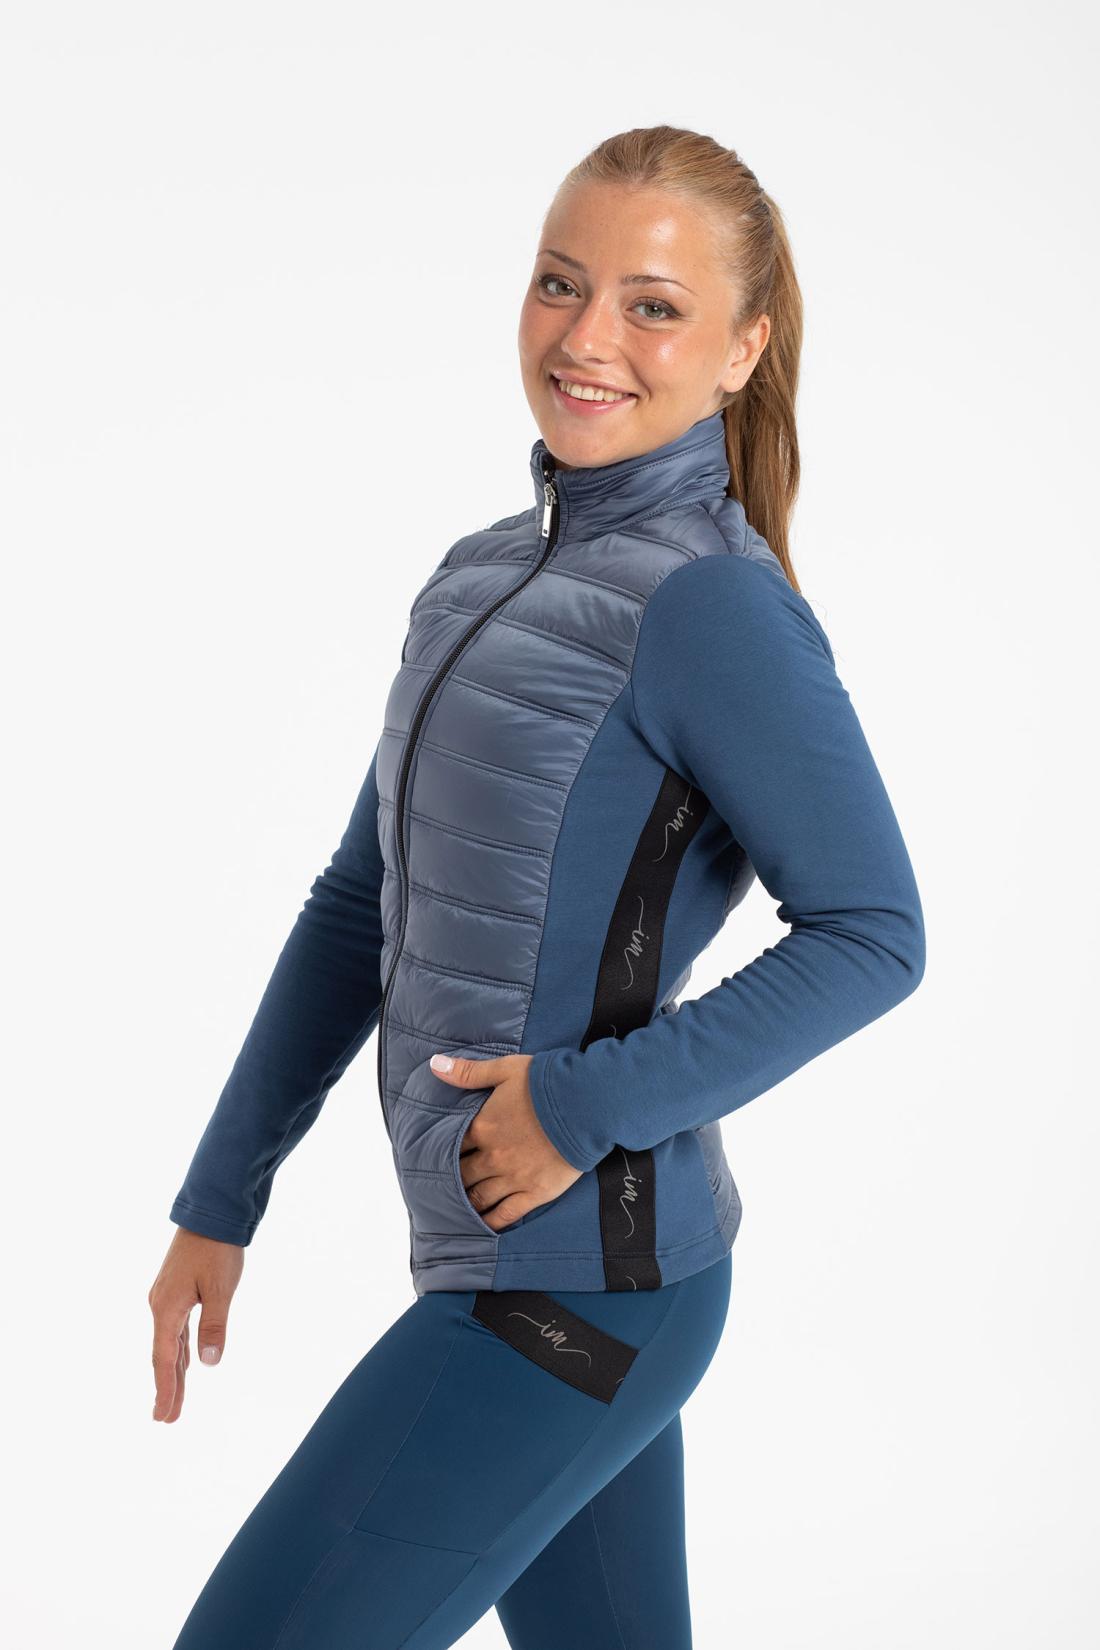 Azuzena padded jacket combined with plush fabric Intermezzo ballet dance skating